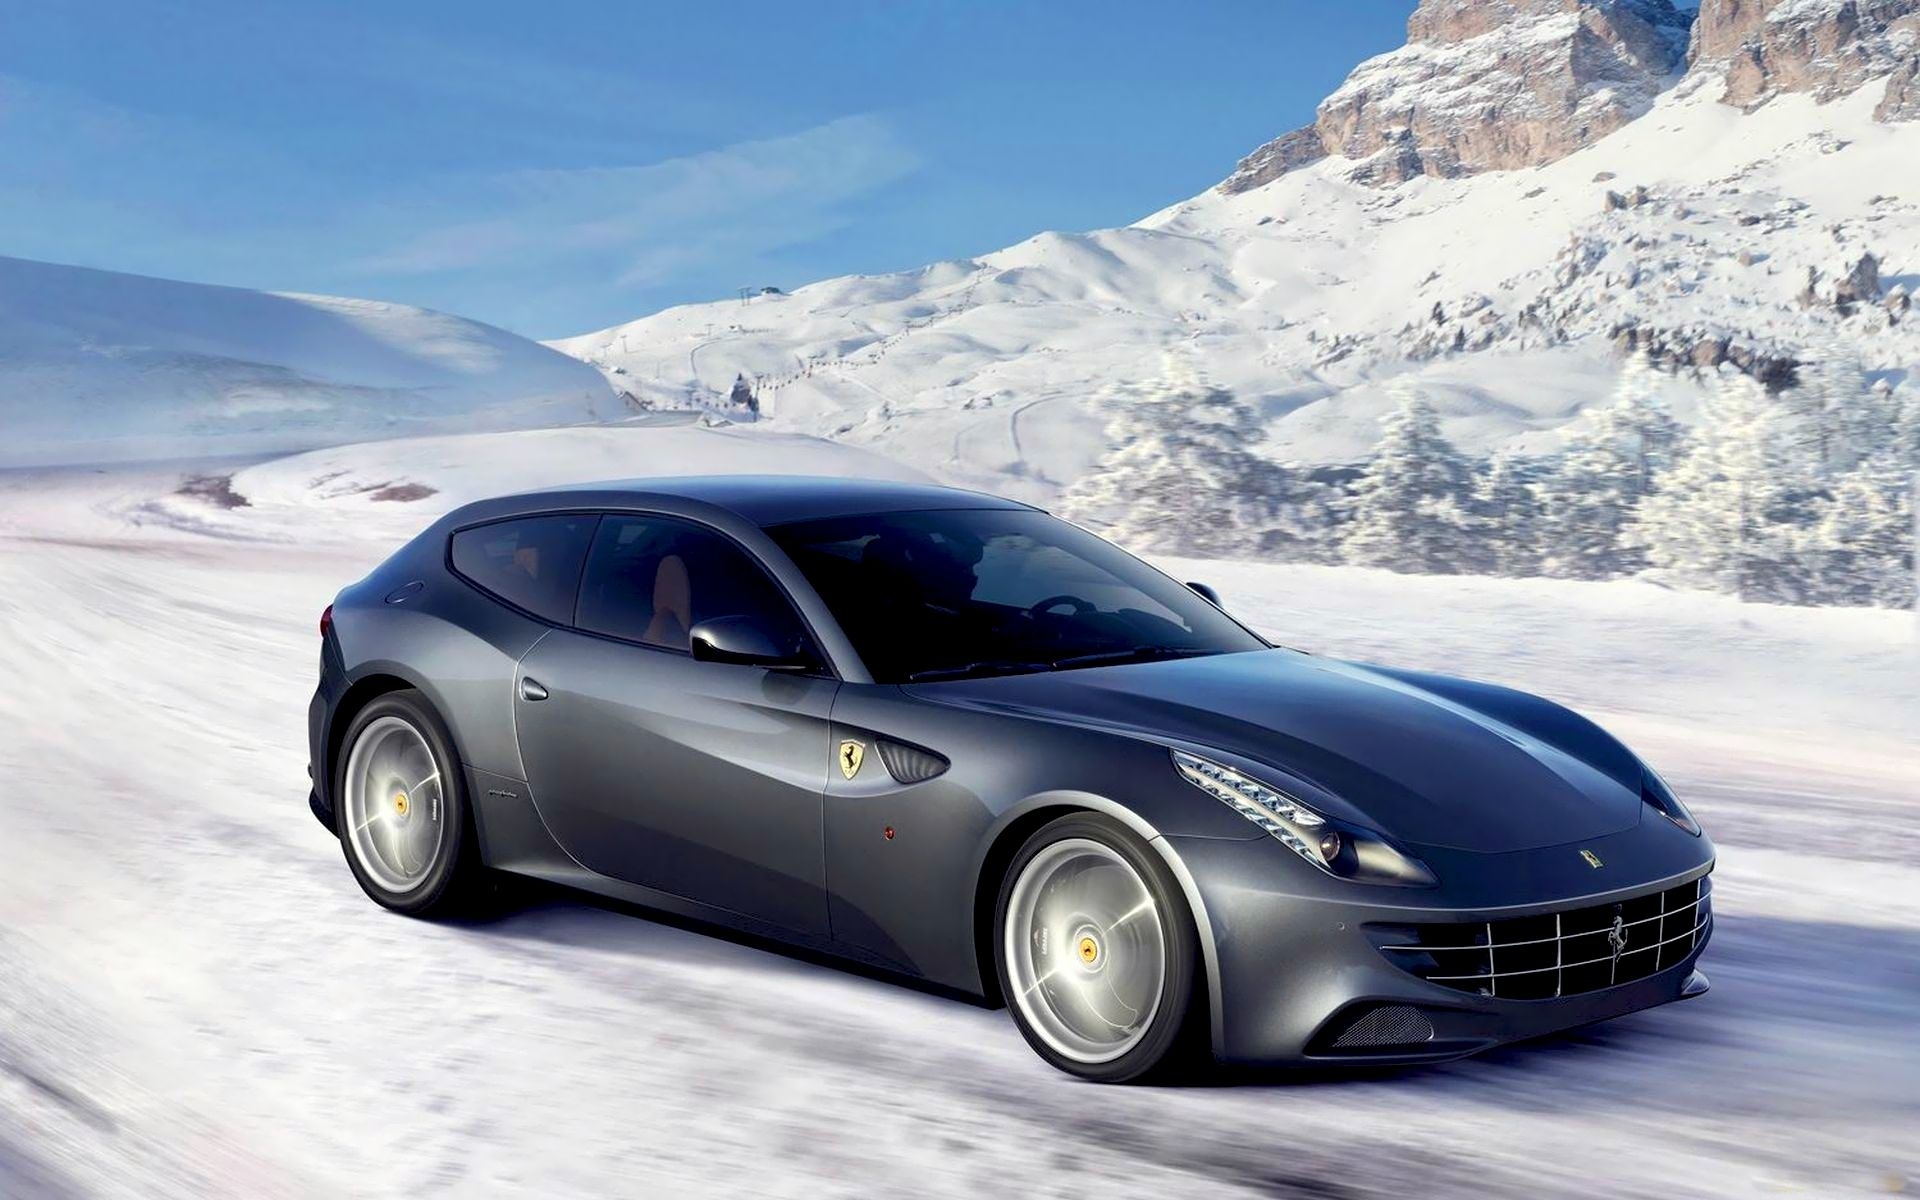 Descarga gratuita de fondo de pantalla para móvil de Invierno, Montañas, Nieve, Paisaje, Transporte, Automóvil, Ferrari.